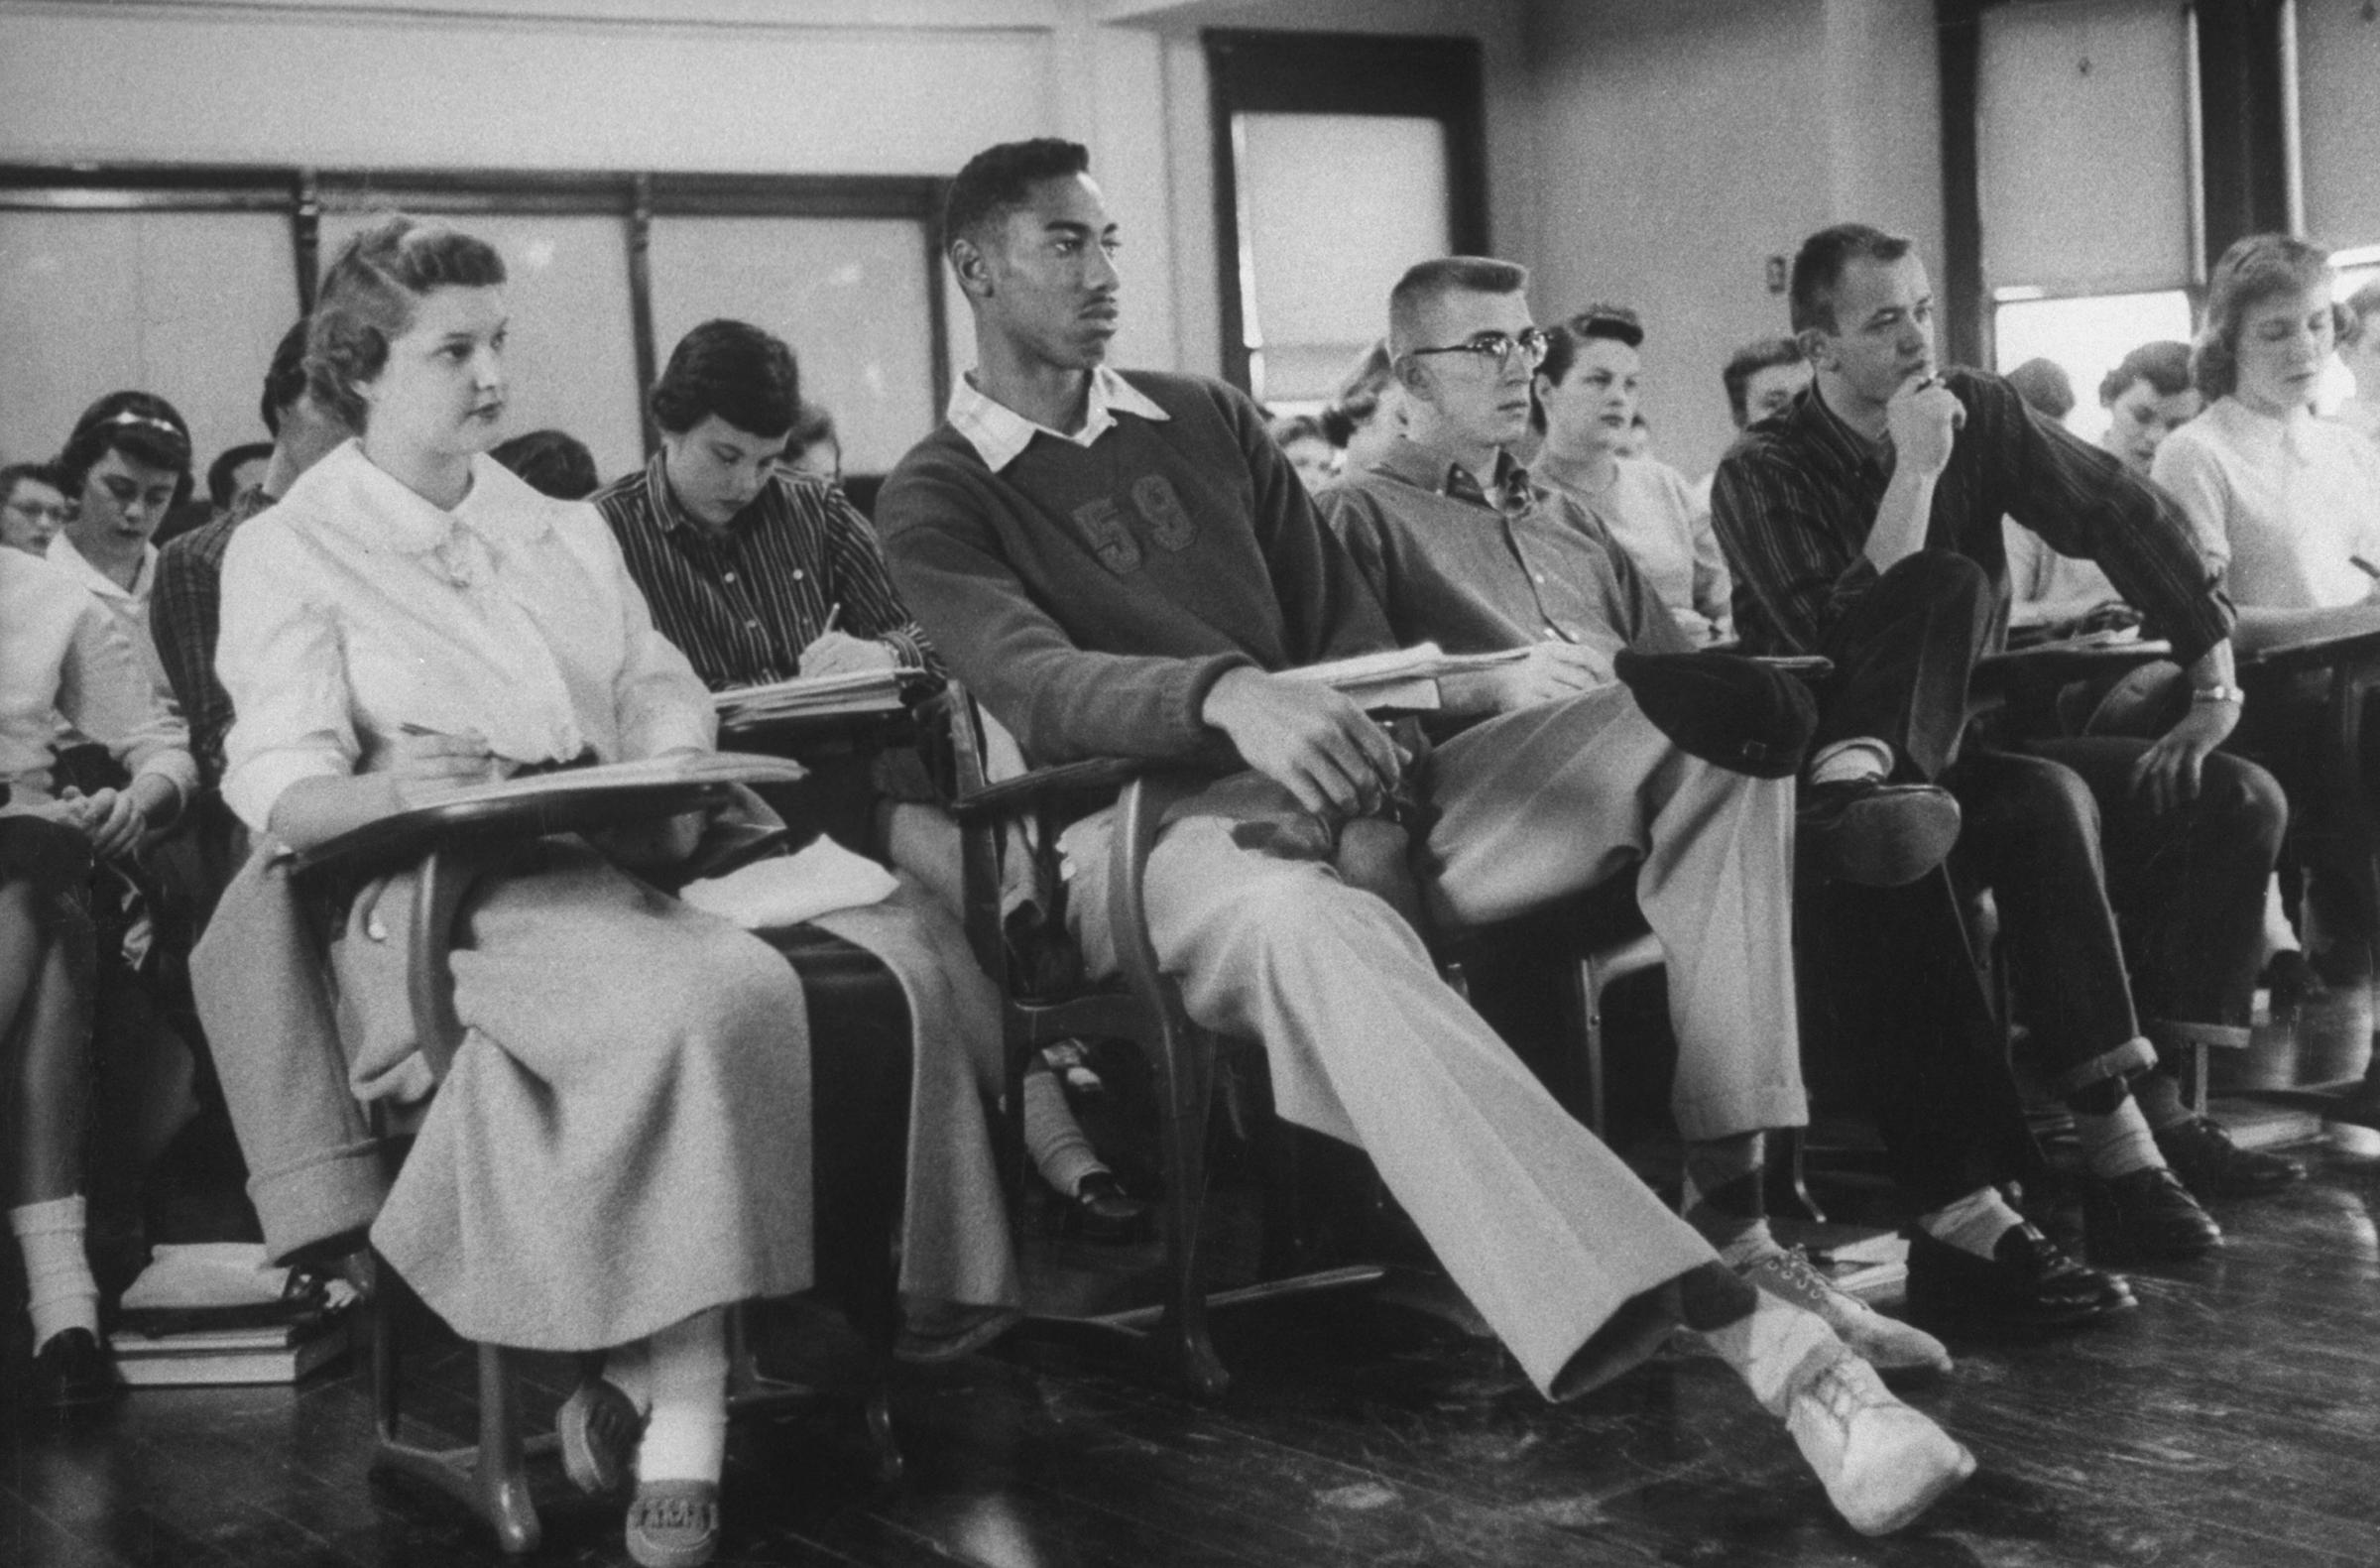 University of Kansas basketball player Wilt Chamberlain in class, 1957.